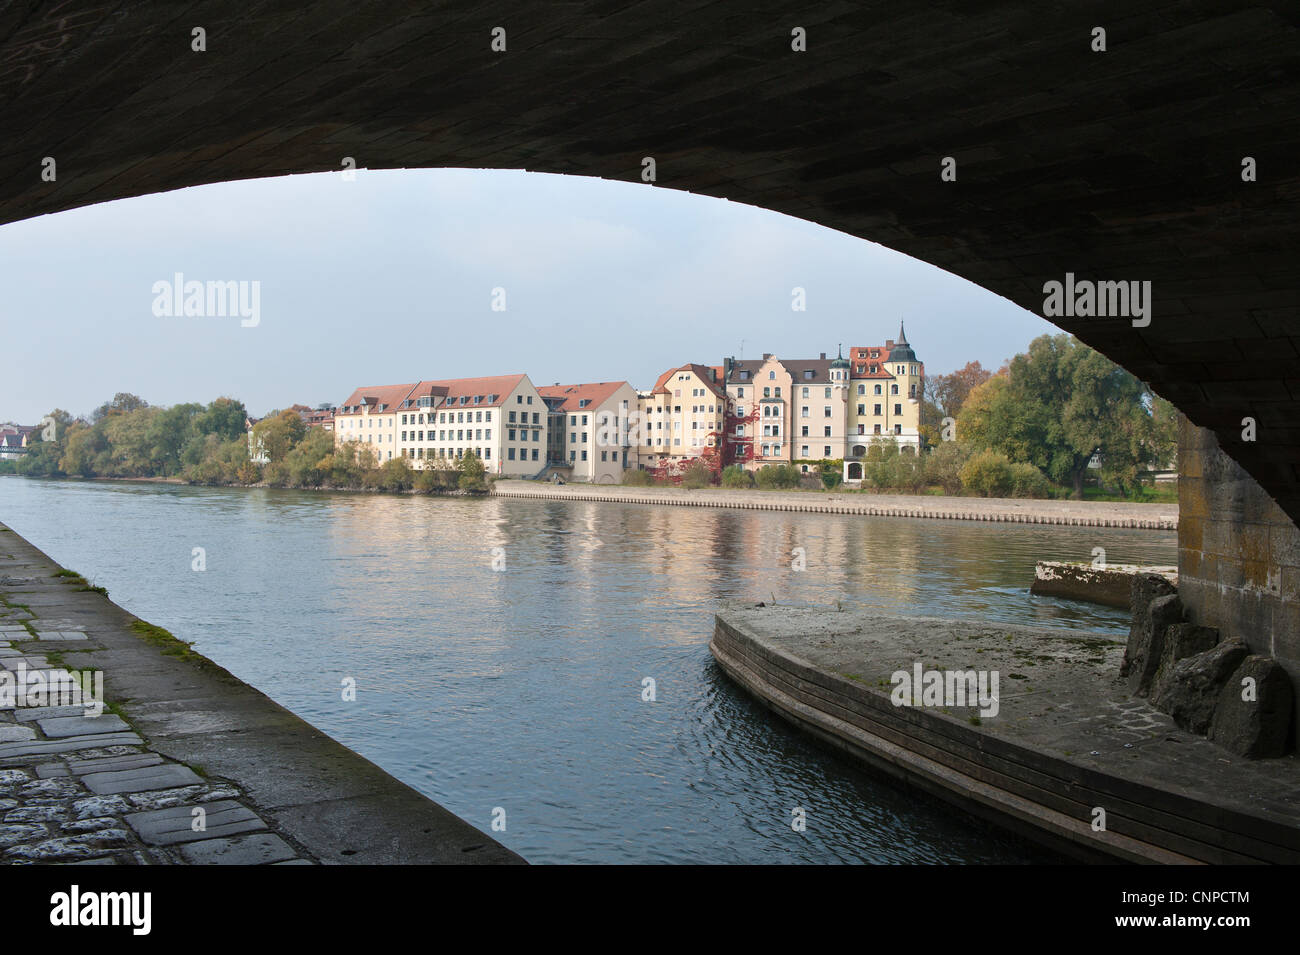 Historic Roman Steinerne Brücke (bridge) over the Danube, Regensburg, Germany. Stock Photo